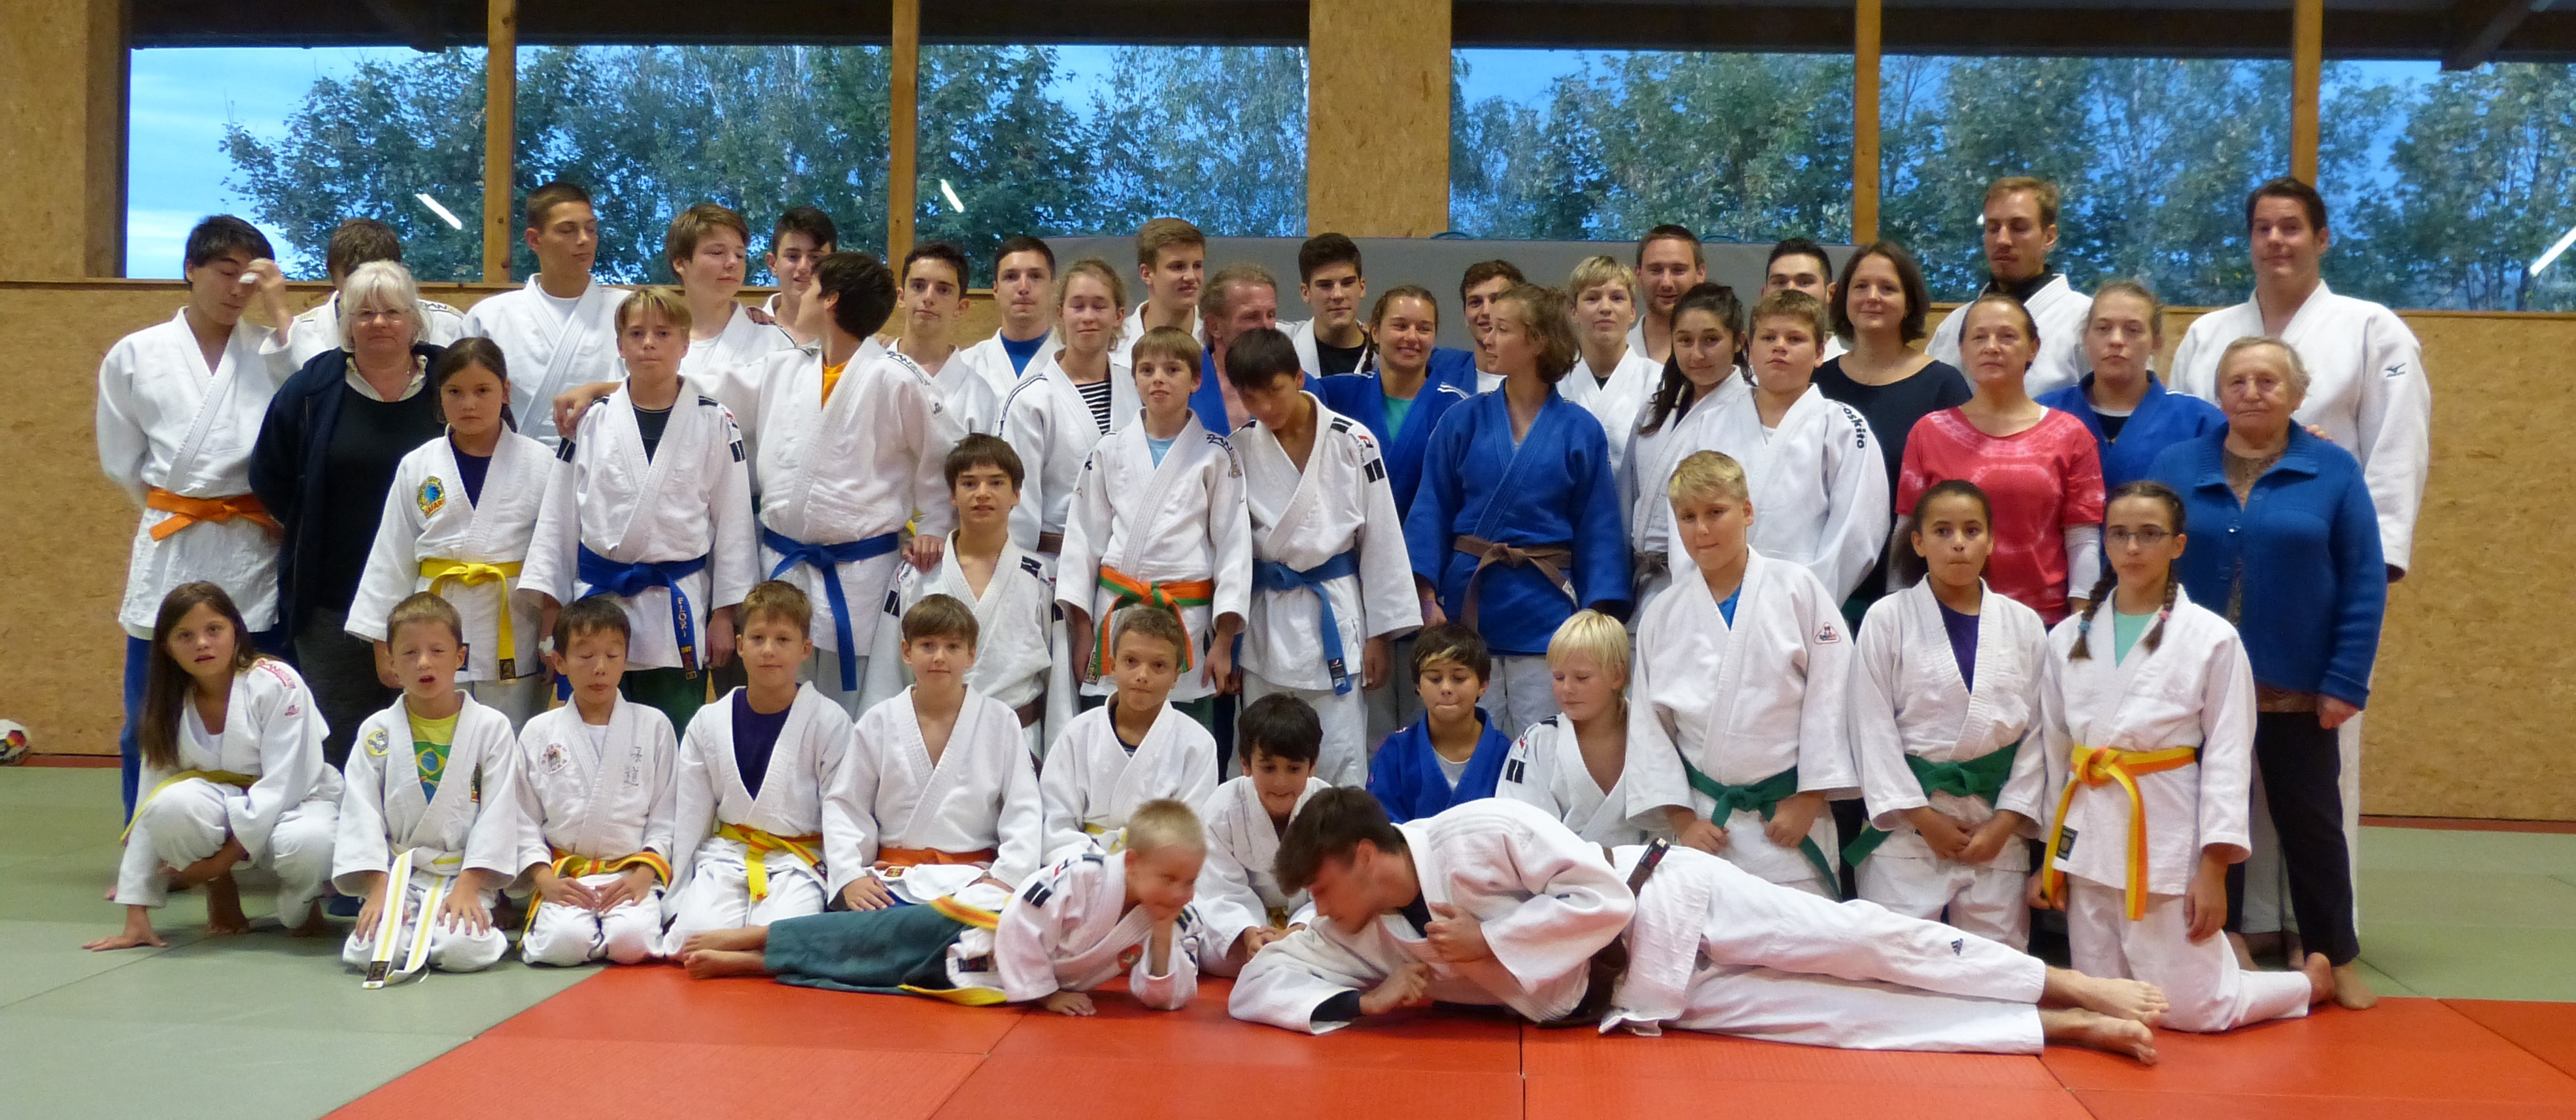 Judo Camp 2017 SC Armin München